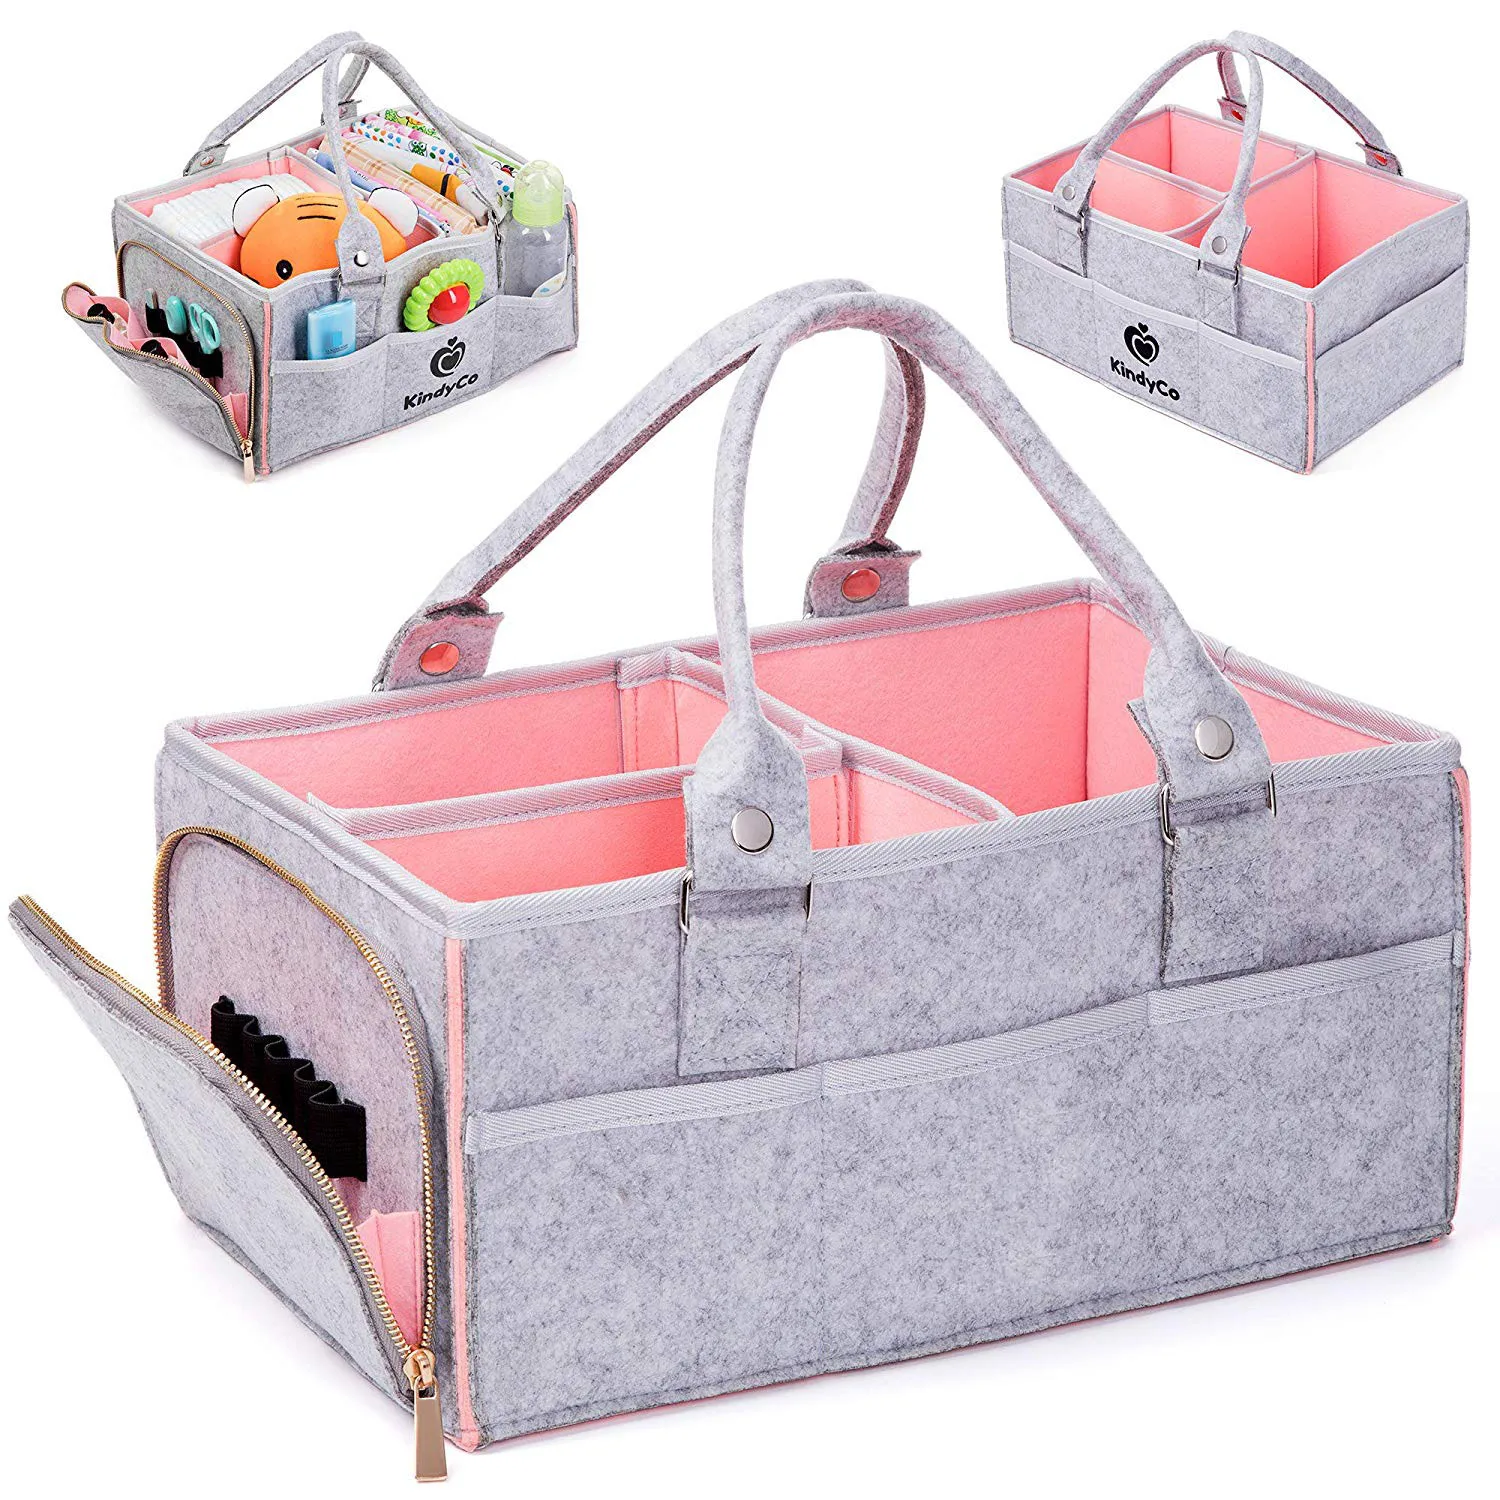 

Amazon Hot selling Portable storage nursury Felt diaper caddy organizer with changing pad, Black or custom